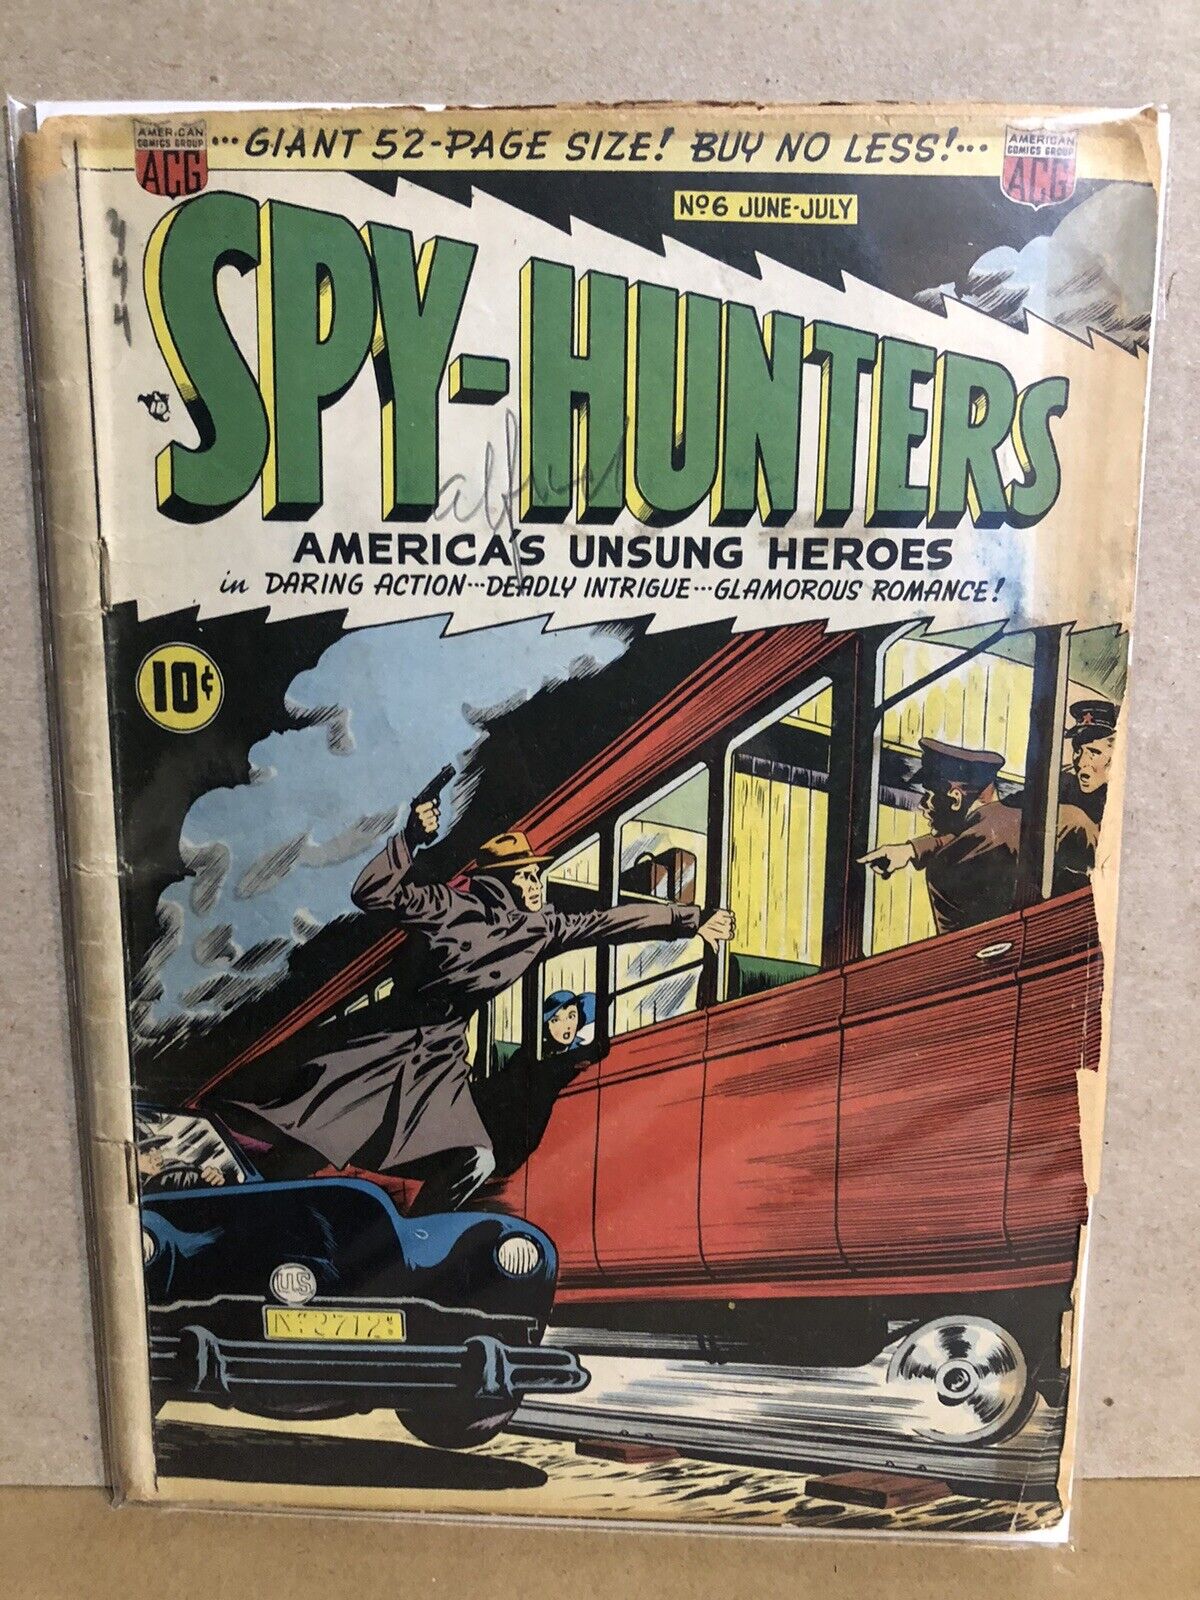 Spy-hunters #6 1950 ACG Comics Hitler Lives After WWII And Battles Nazi Nemesis